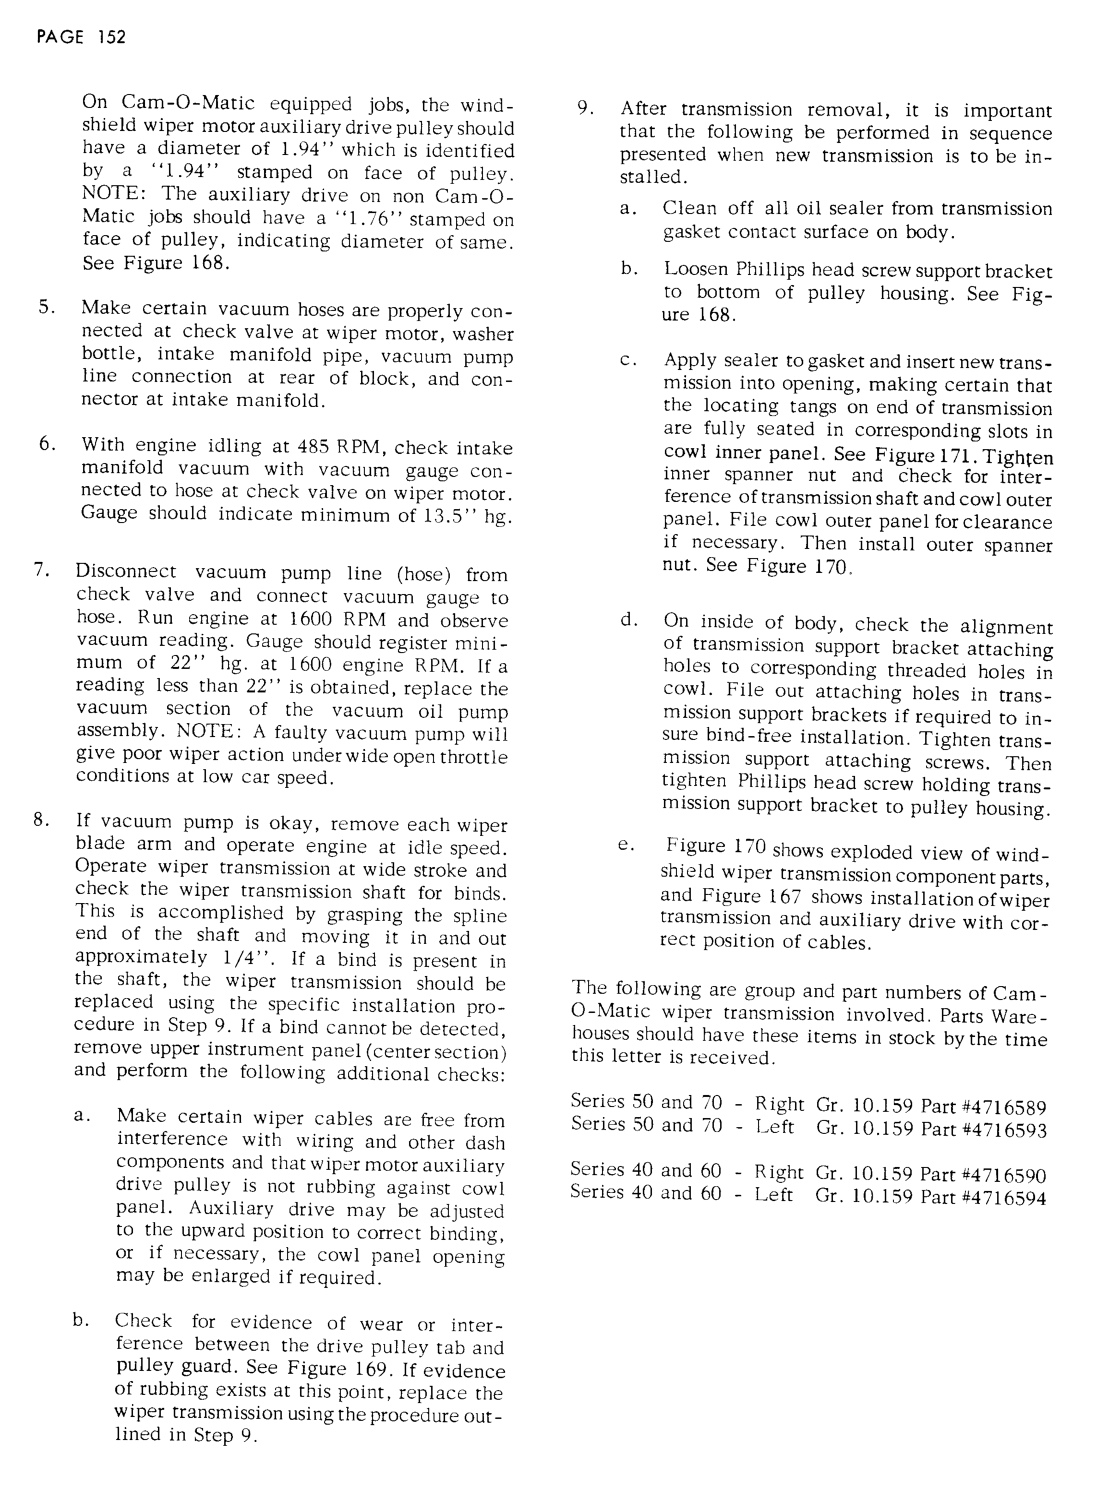 n_1957 Buick Product Service  Bulletins-153-153.jpg